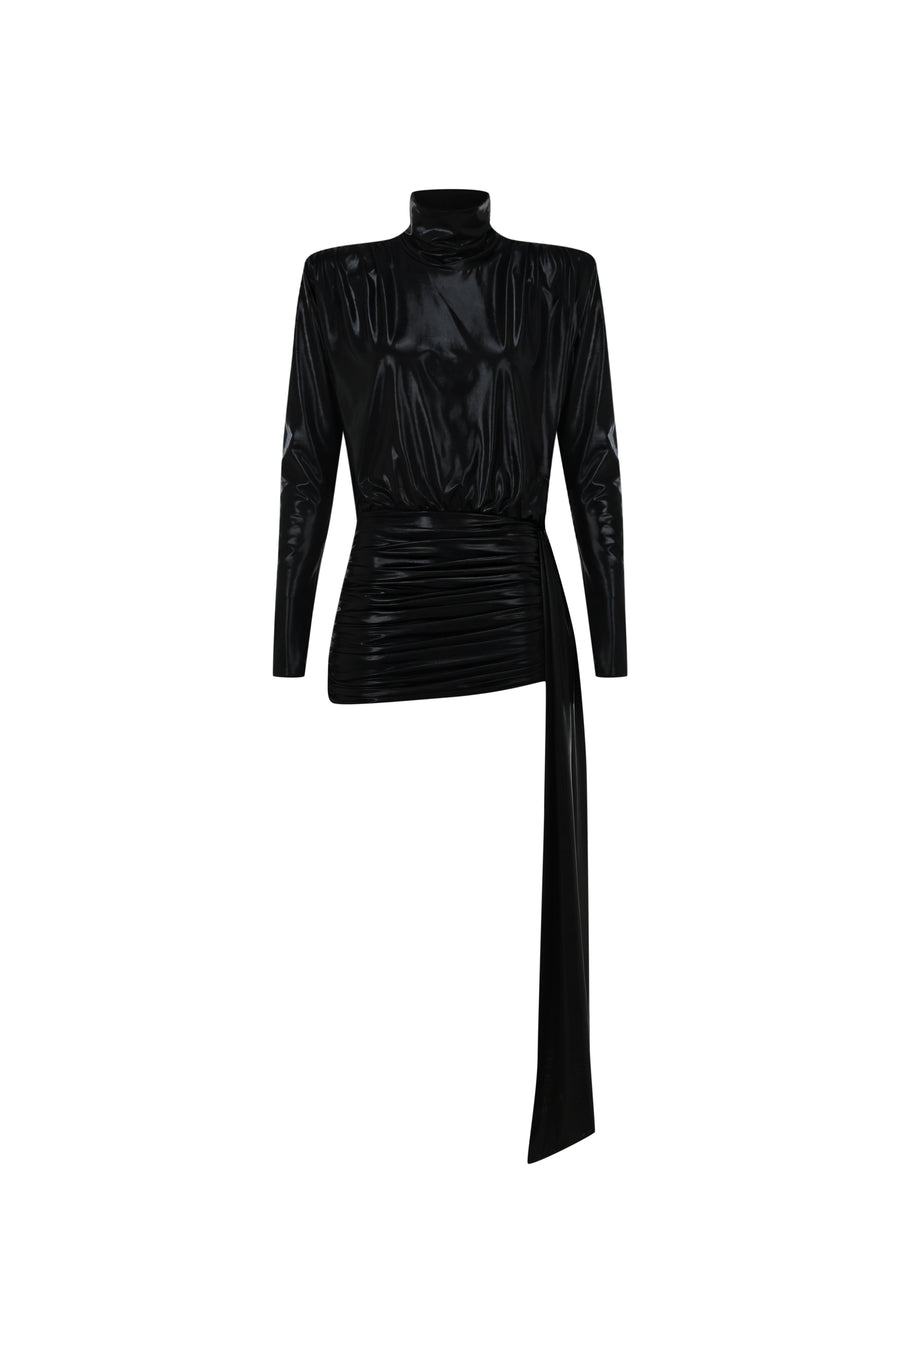 The Yvette onyx black mini dress